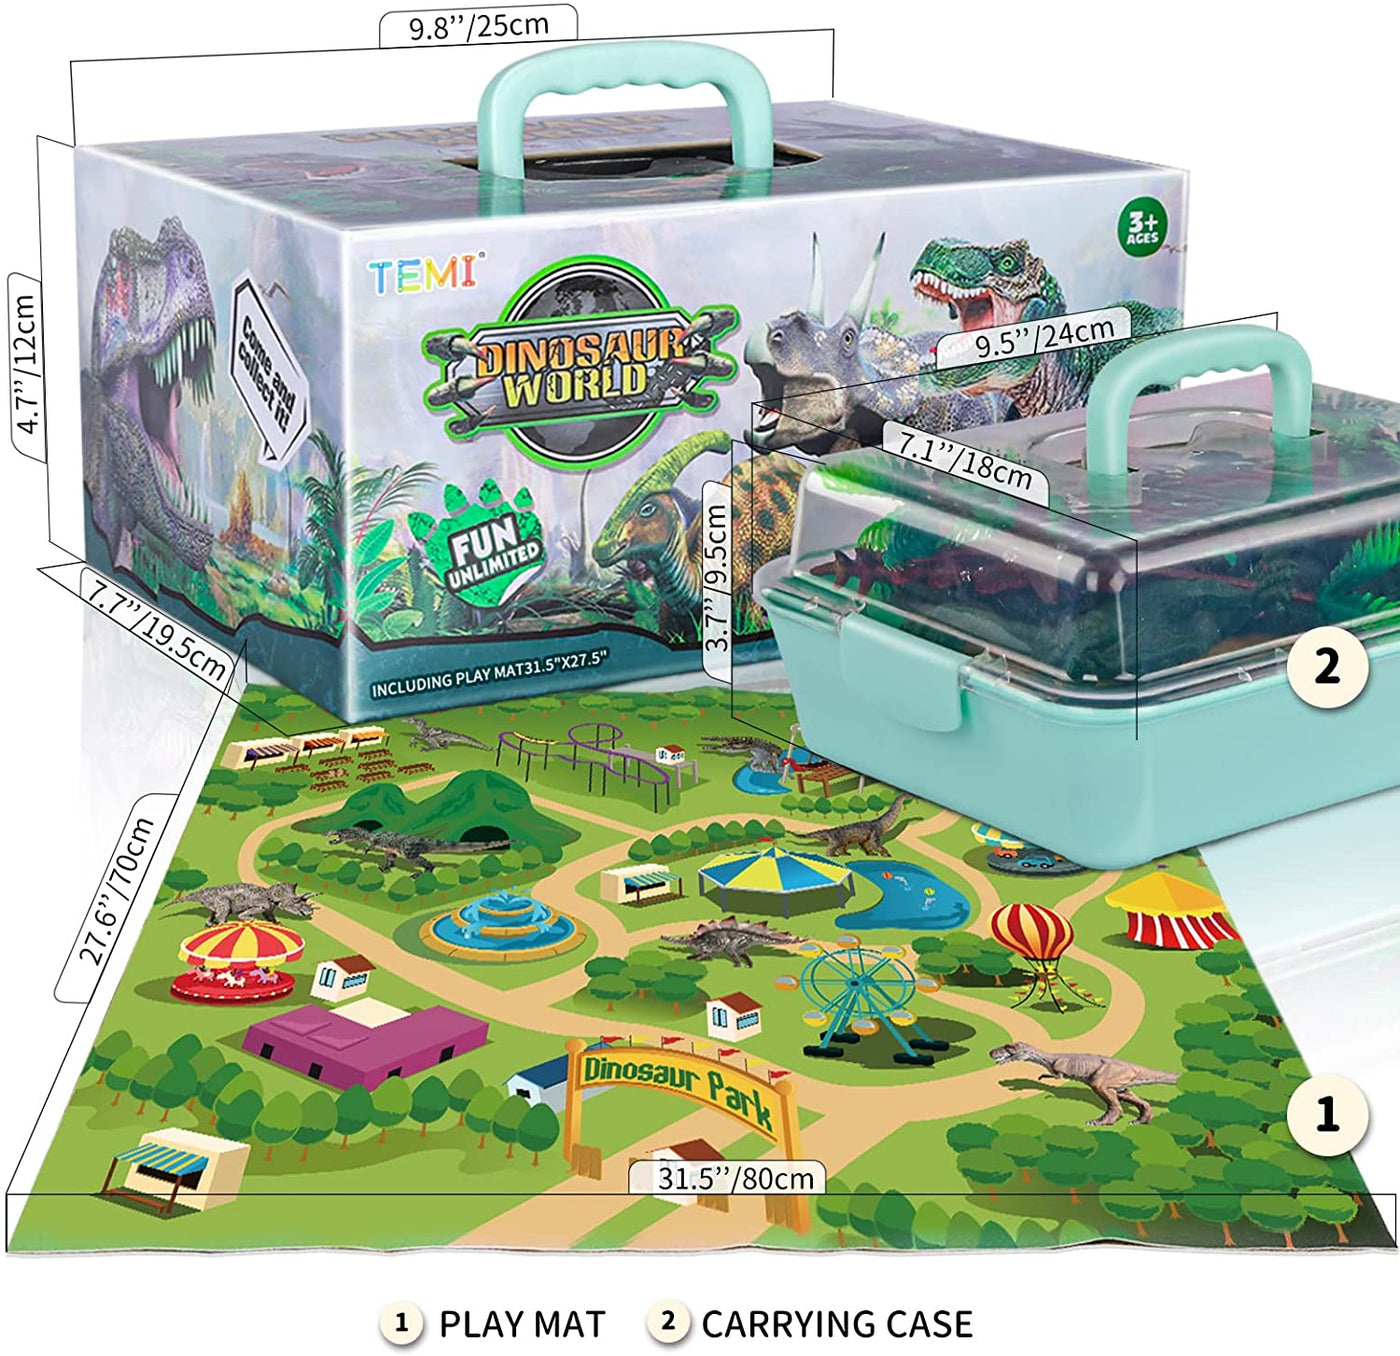 Educational Dinosaur Play Set for Kids